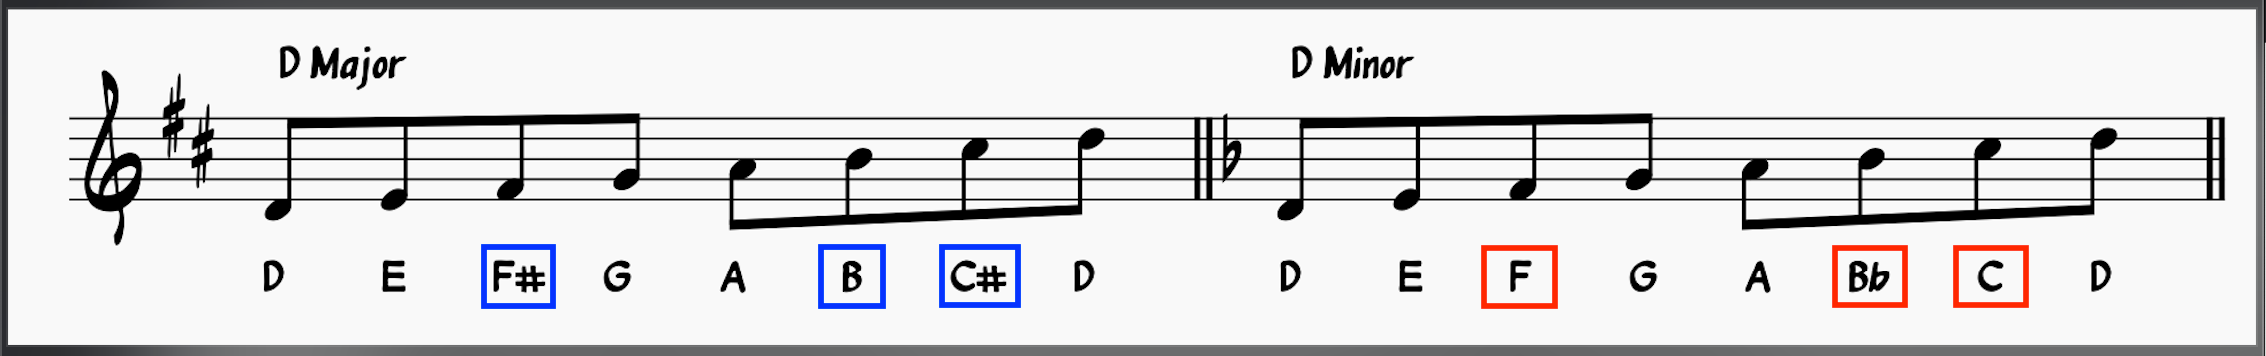 D Major and its parallel minor key D Minor